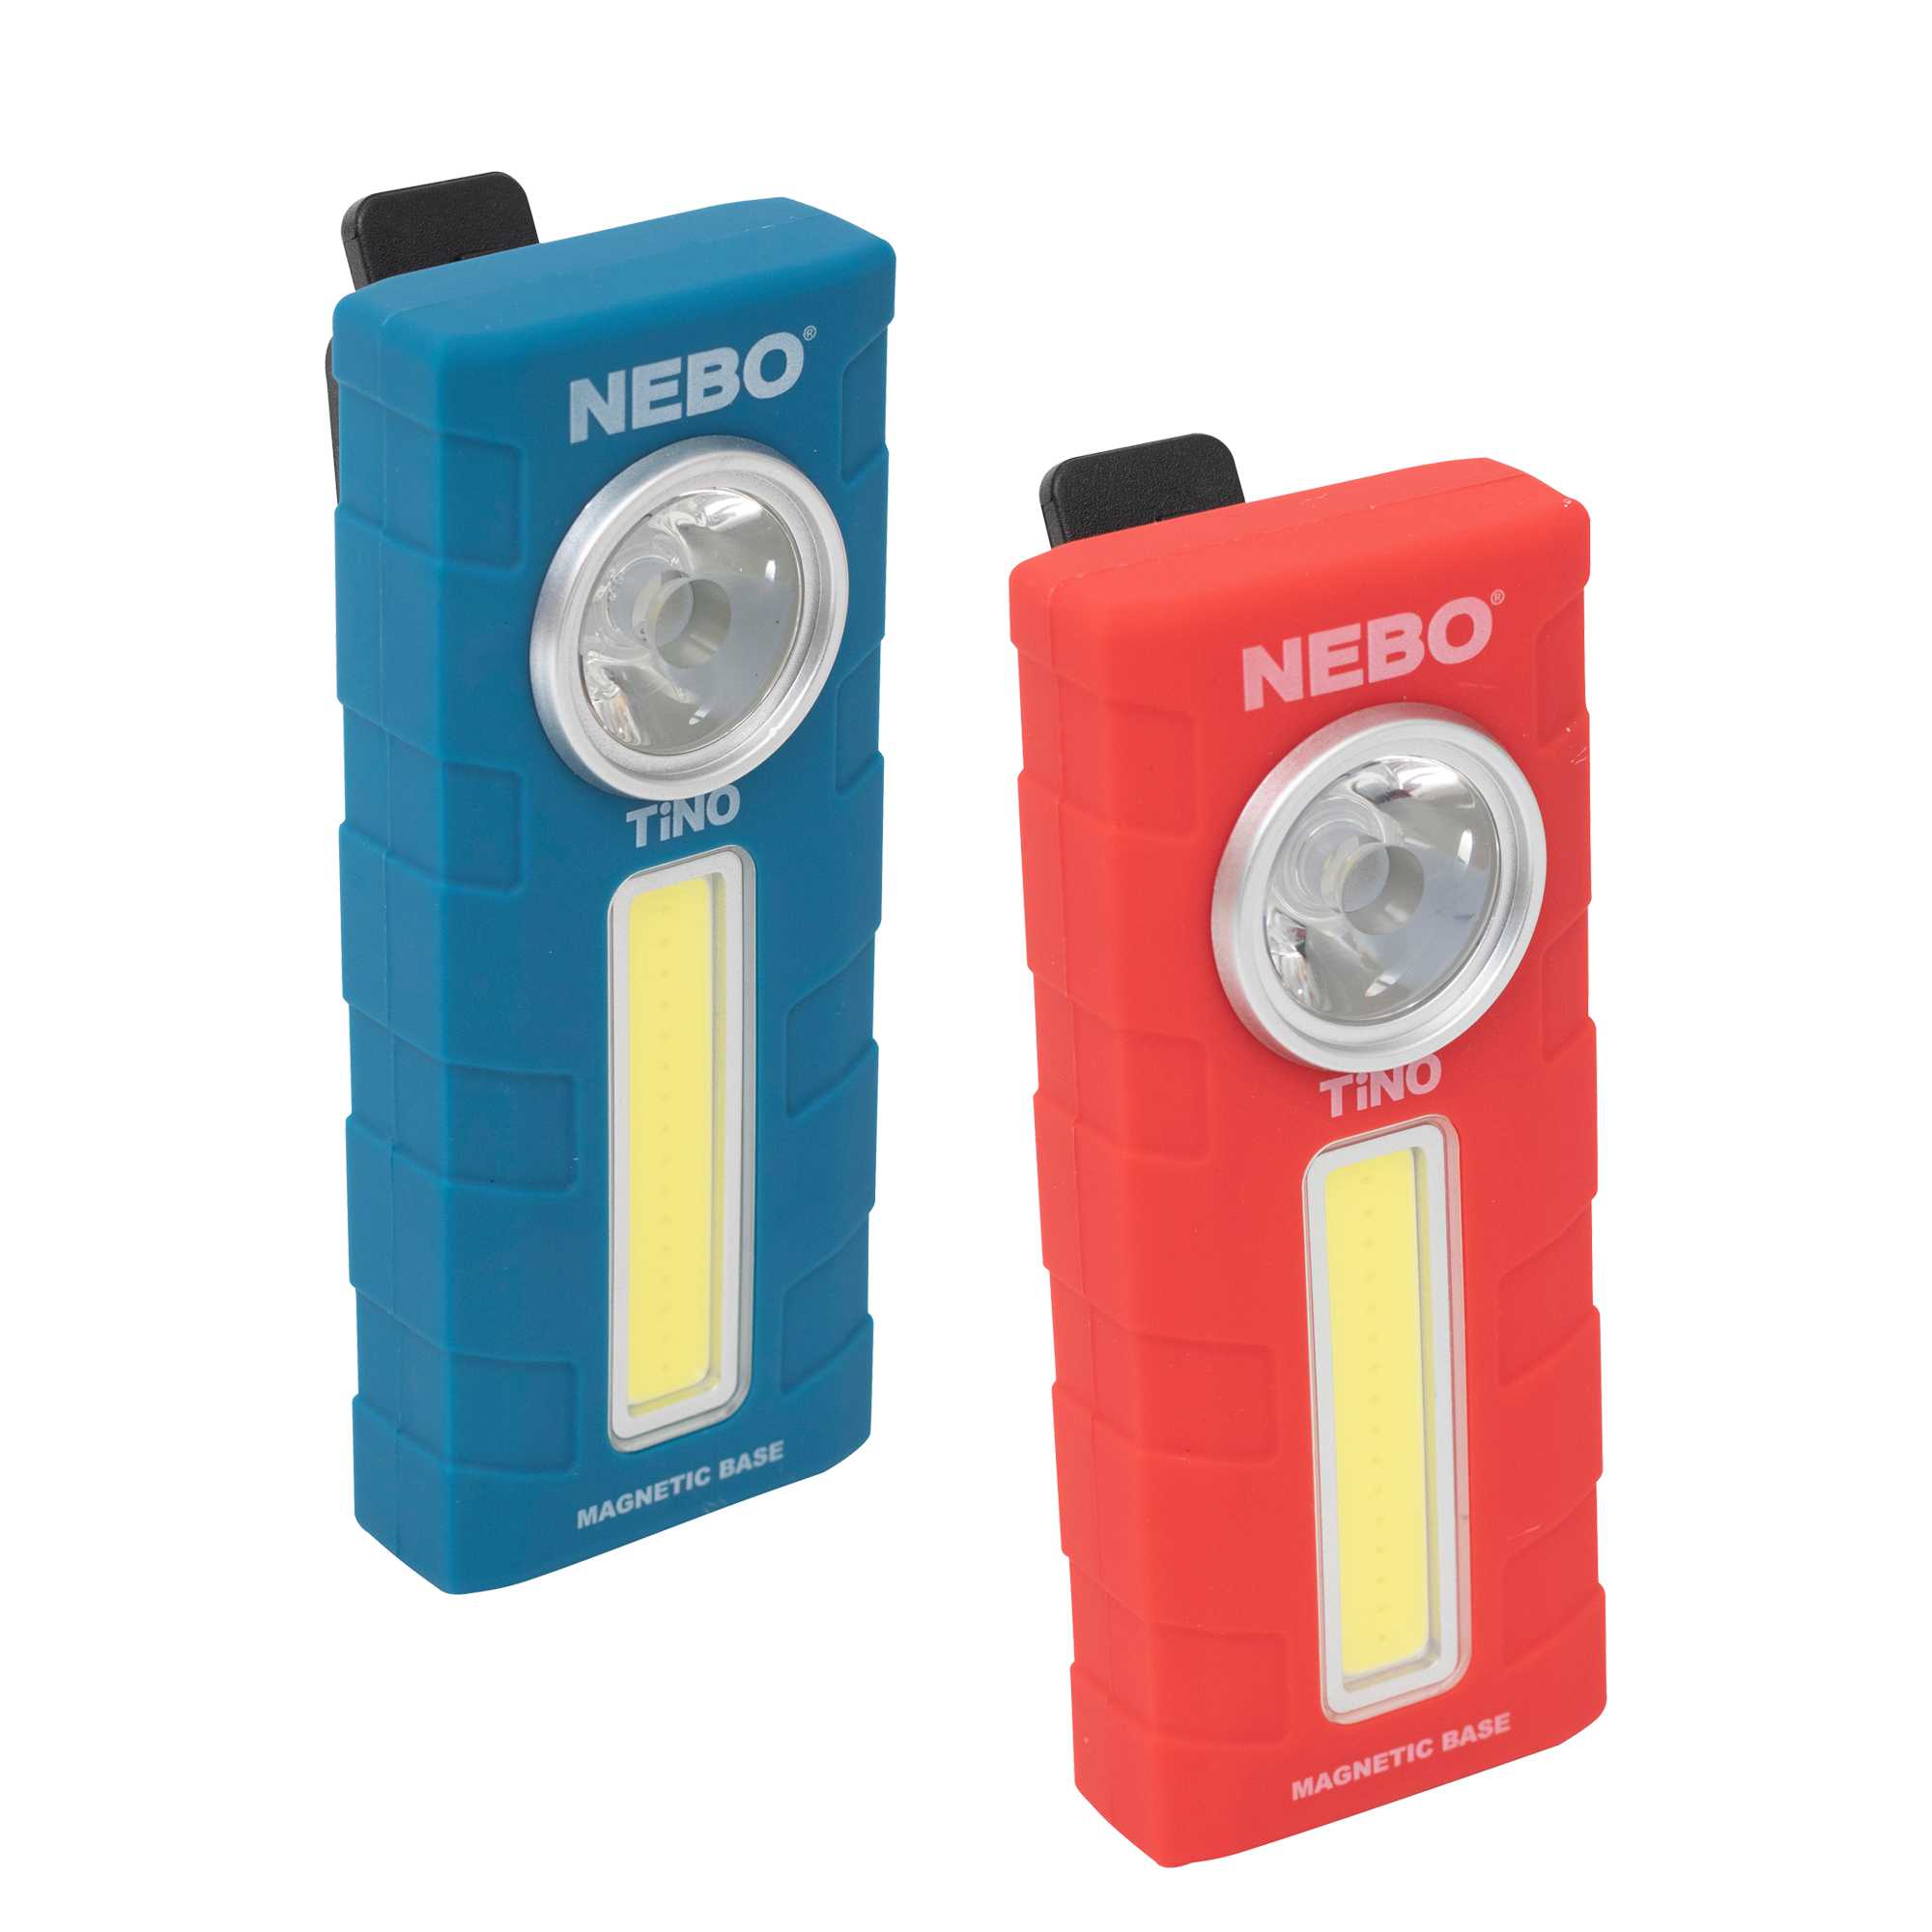 NEBO TINO Slim Pocket 2 in 1 Flashlight